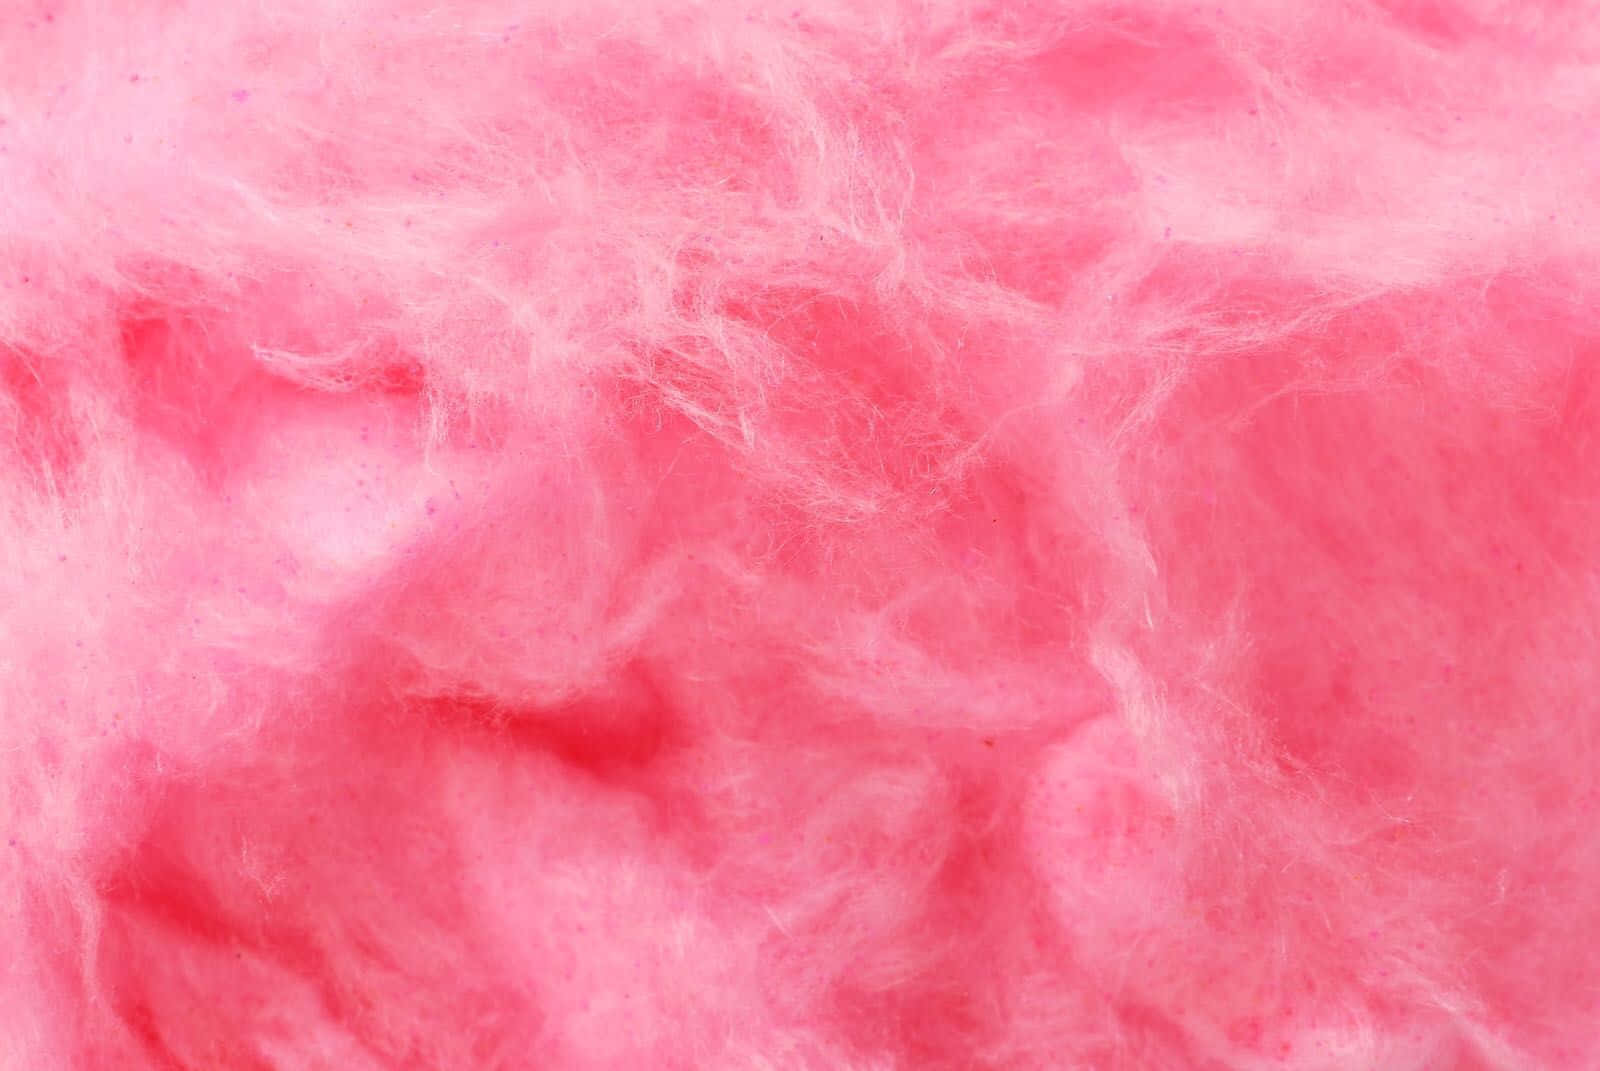 Pink Cotton Candy 1600 X 1071 Wallpaper